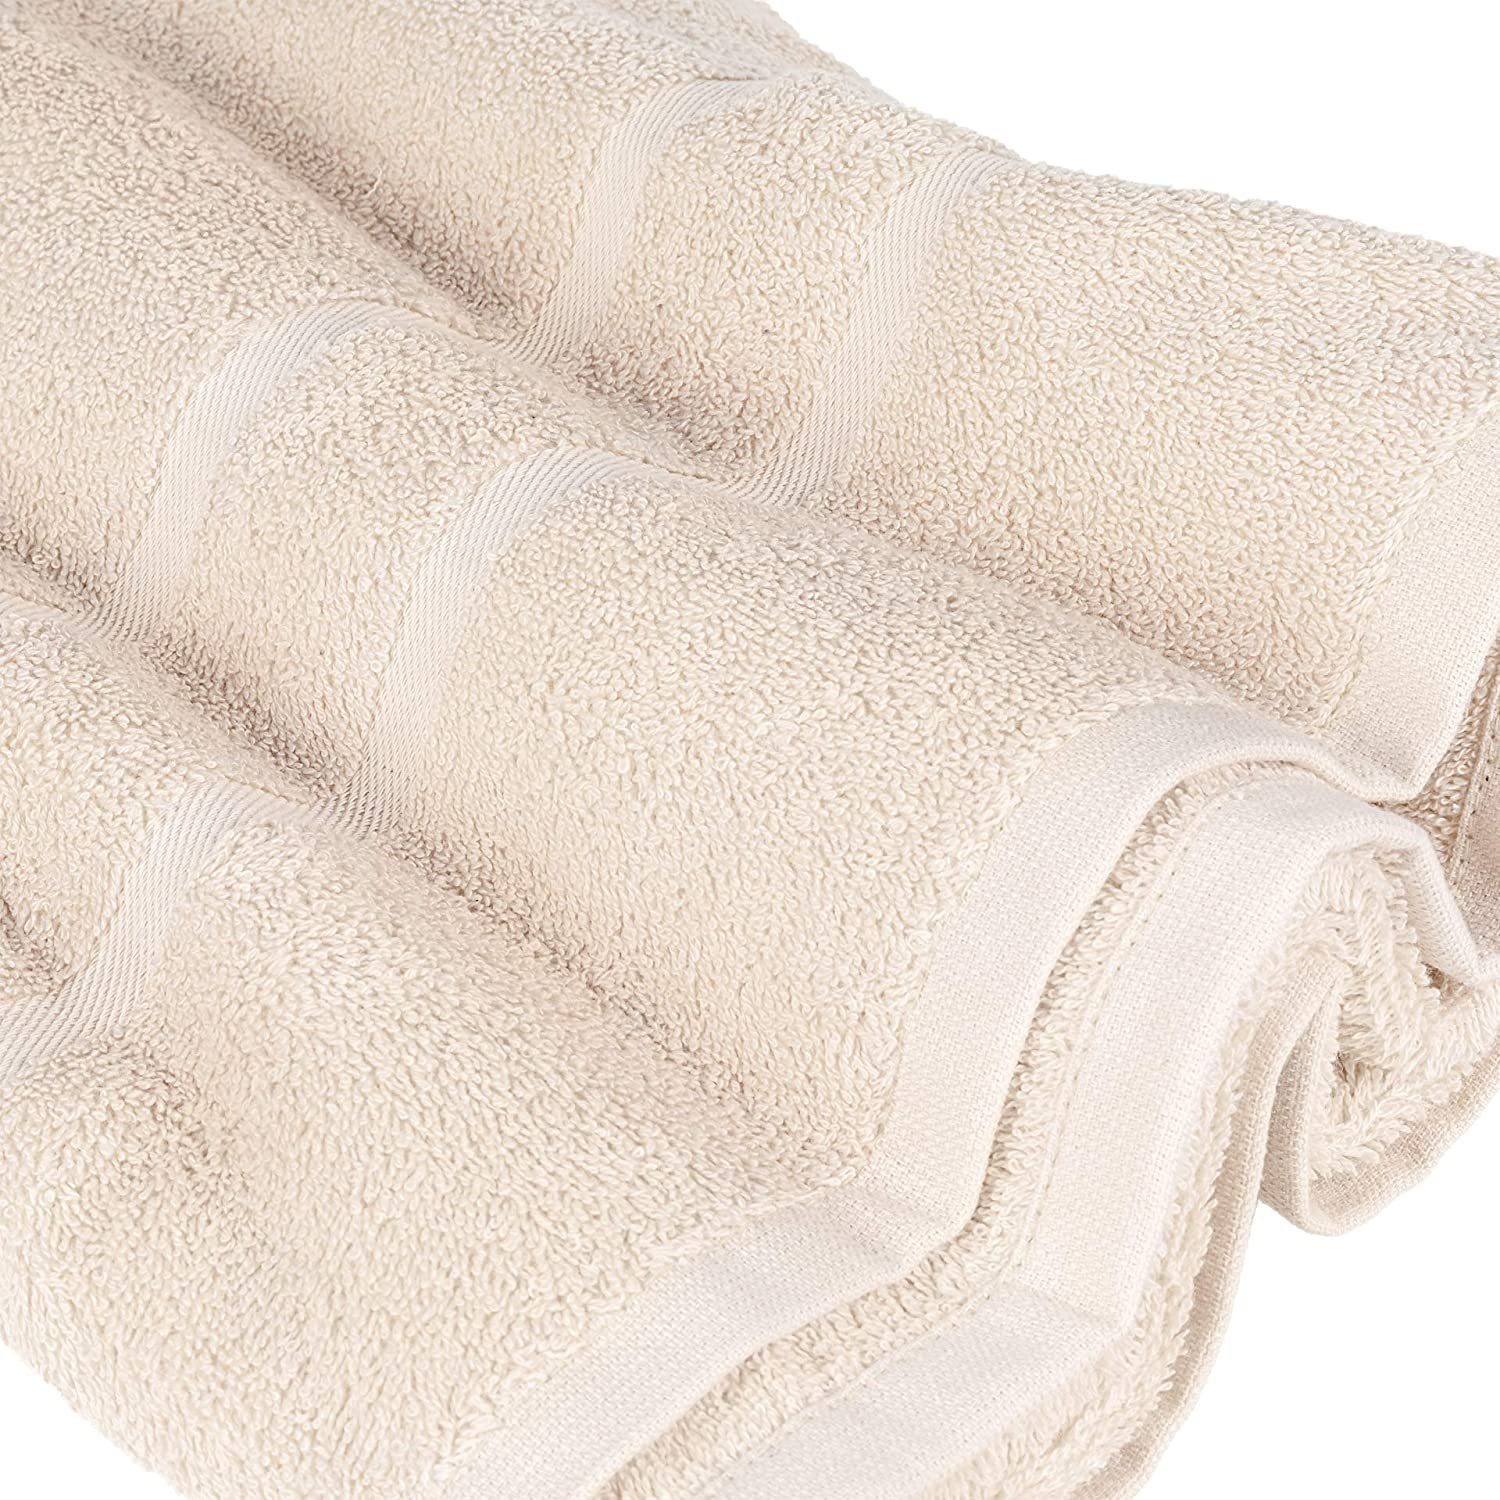 Handtuch Badetücher 6x in (16 16er GSM Farben 4x Baumwolle Frottee SET Baumwolle GSM verschiedenen Pack, Set Teilig) als 100% Creme Handtuch Handtücher 4x 2x Gästehandtuch 100% StickandShine 500 Duschtücher 500